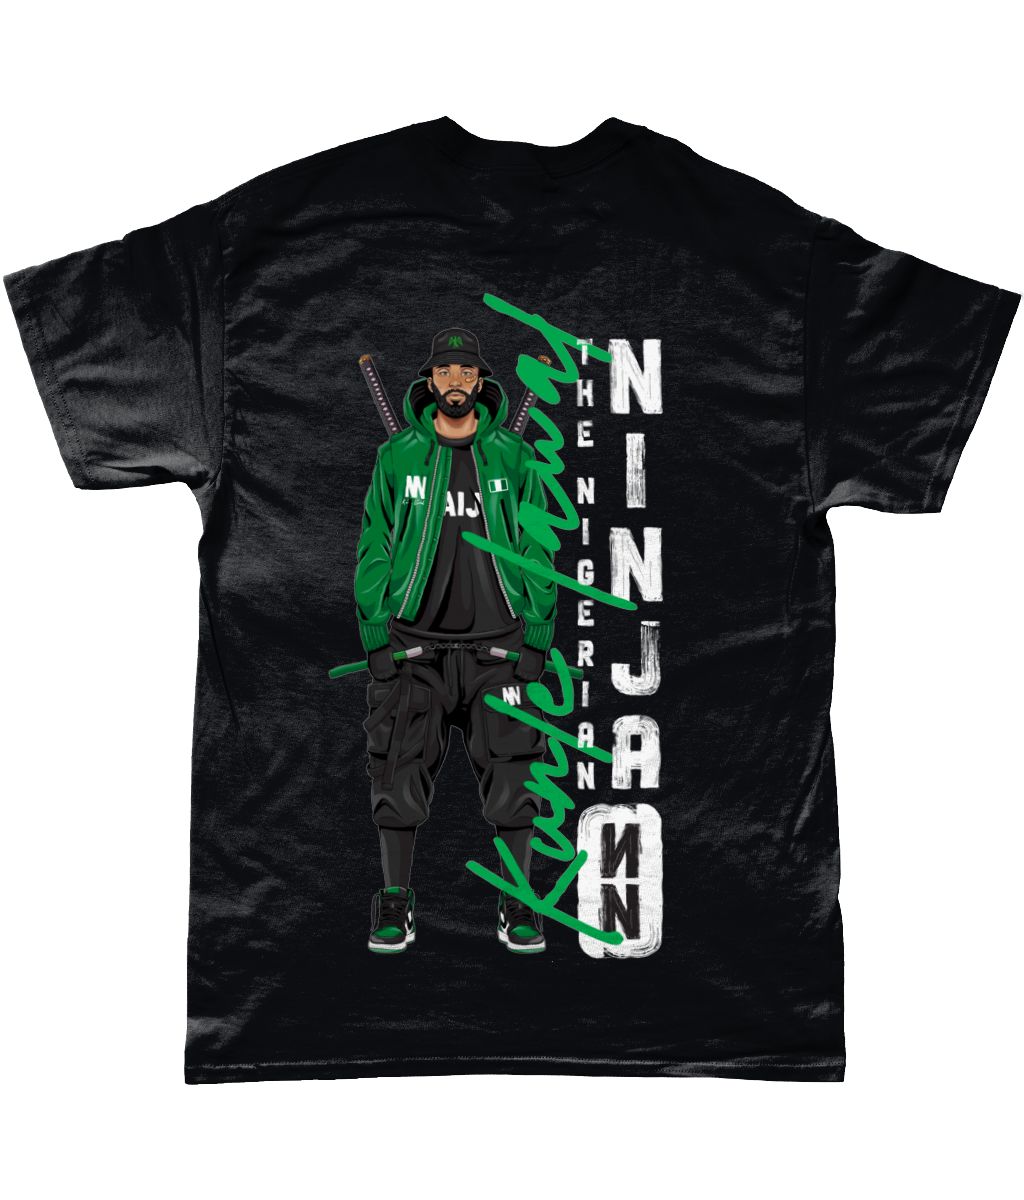 The Nigerian Ninja Back Print T-Shirt